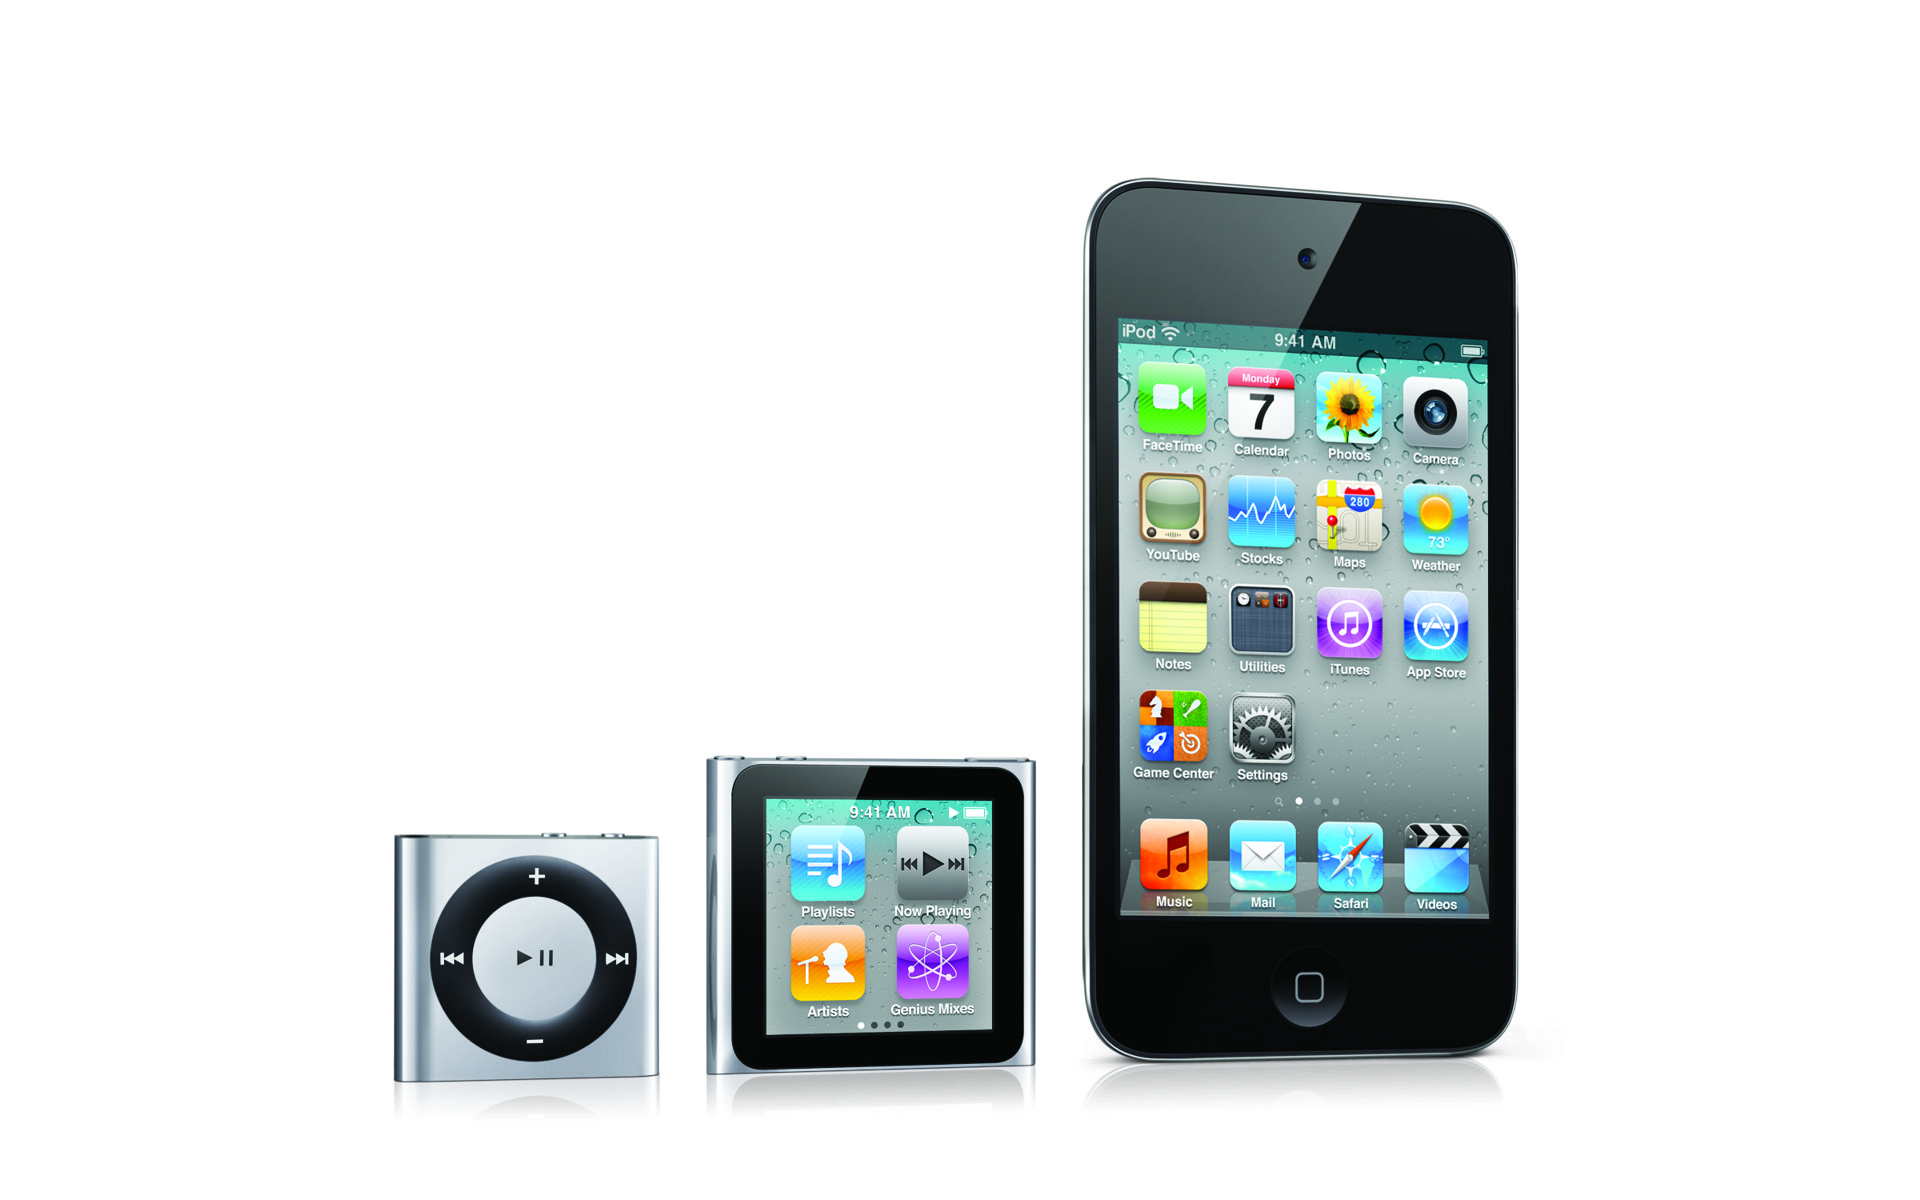 Media asset in full size related to 3dfxzone.it news item entitled as follows: Apple rinnova gli iPod touch e iPod nano, ora con iOS 5 e iCloud | Image Name: news15807_1.jpg